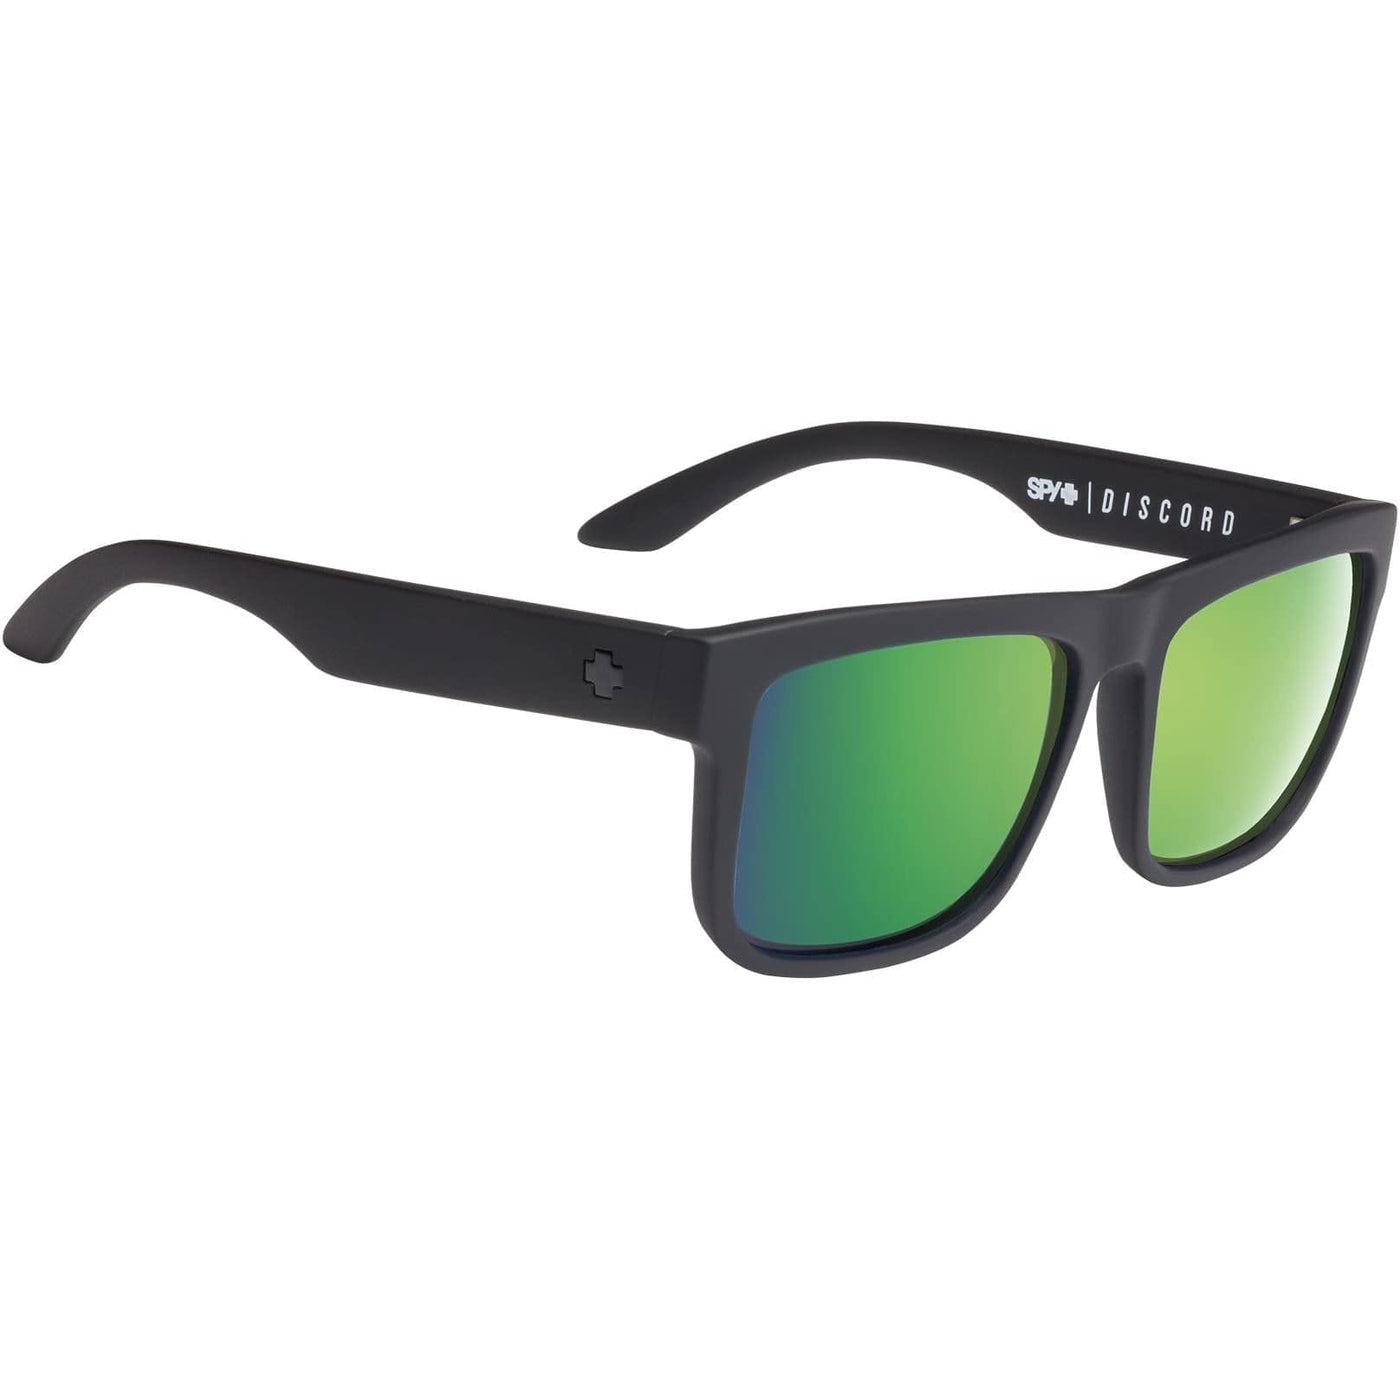 Polarized Green Sunglasses